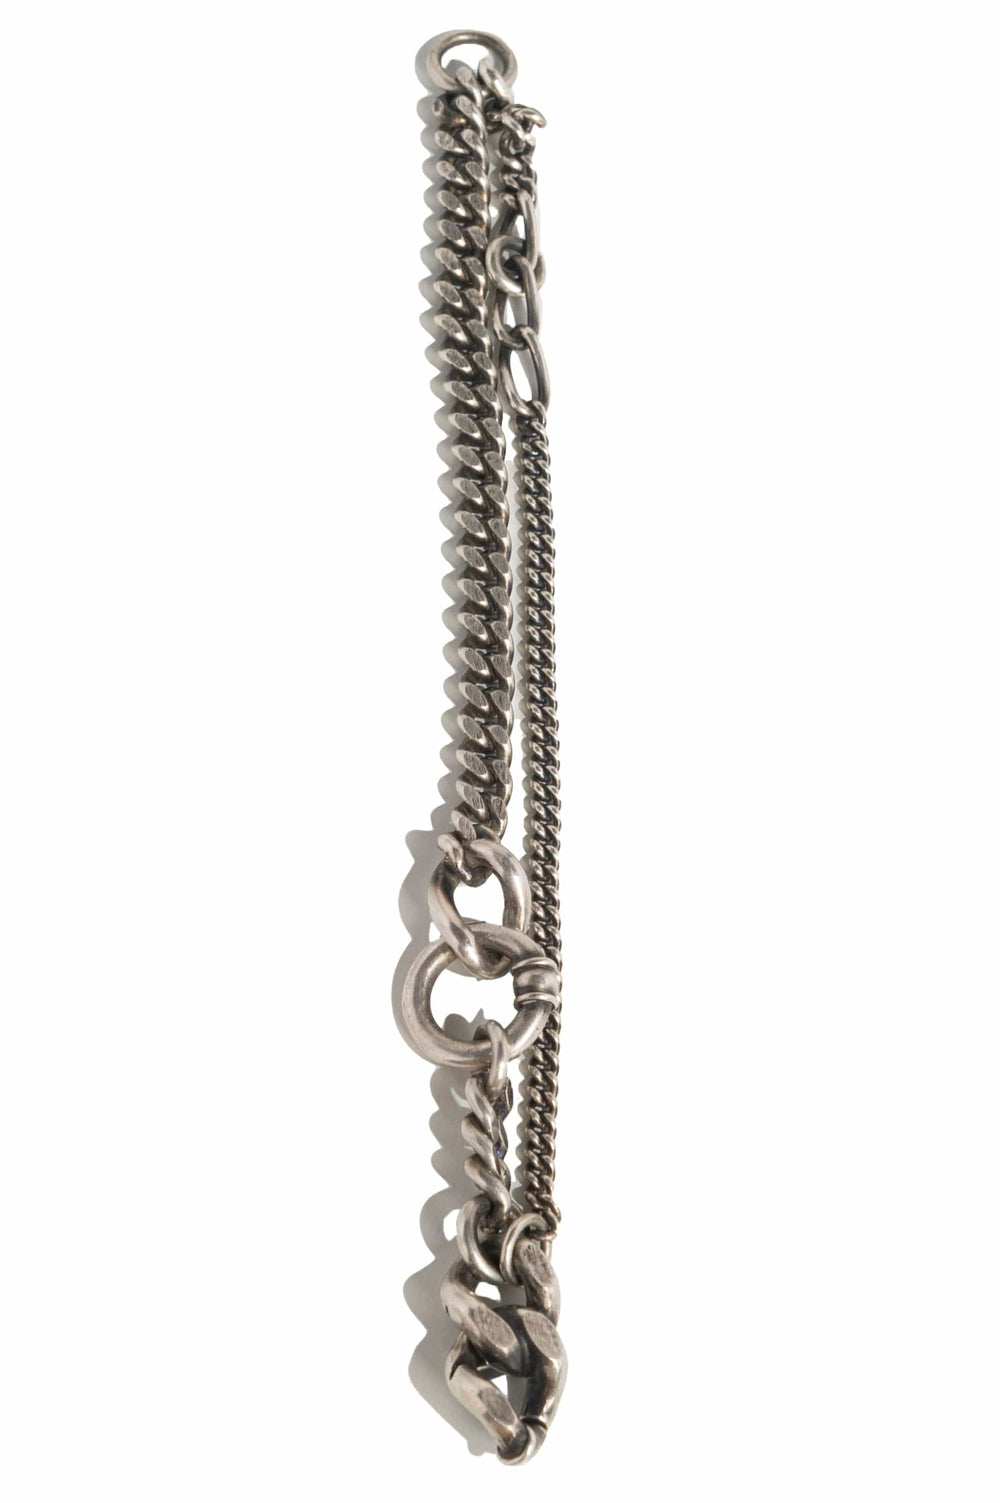 Werkstatt München – Bracelet Chains Two Lifestyle and Fashion Silver Antidote Ring